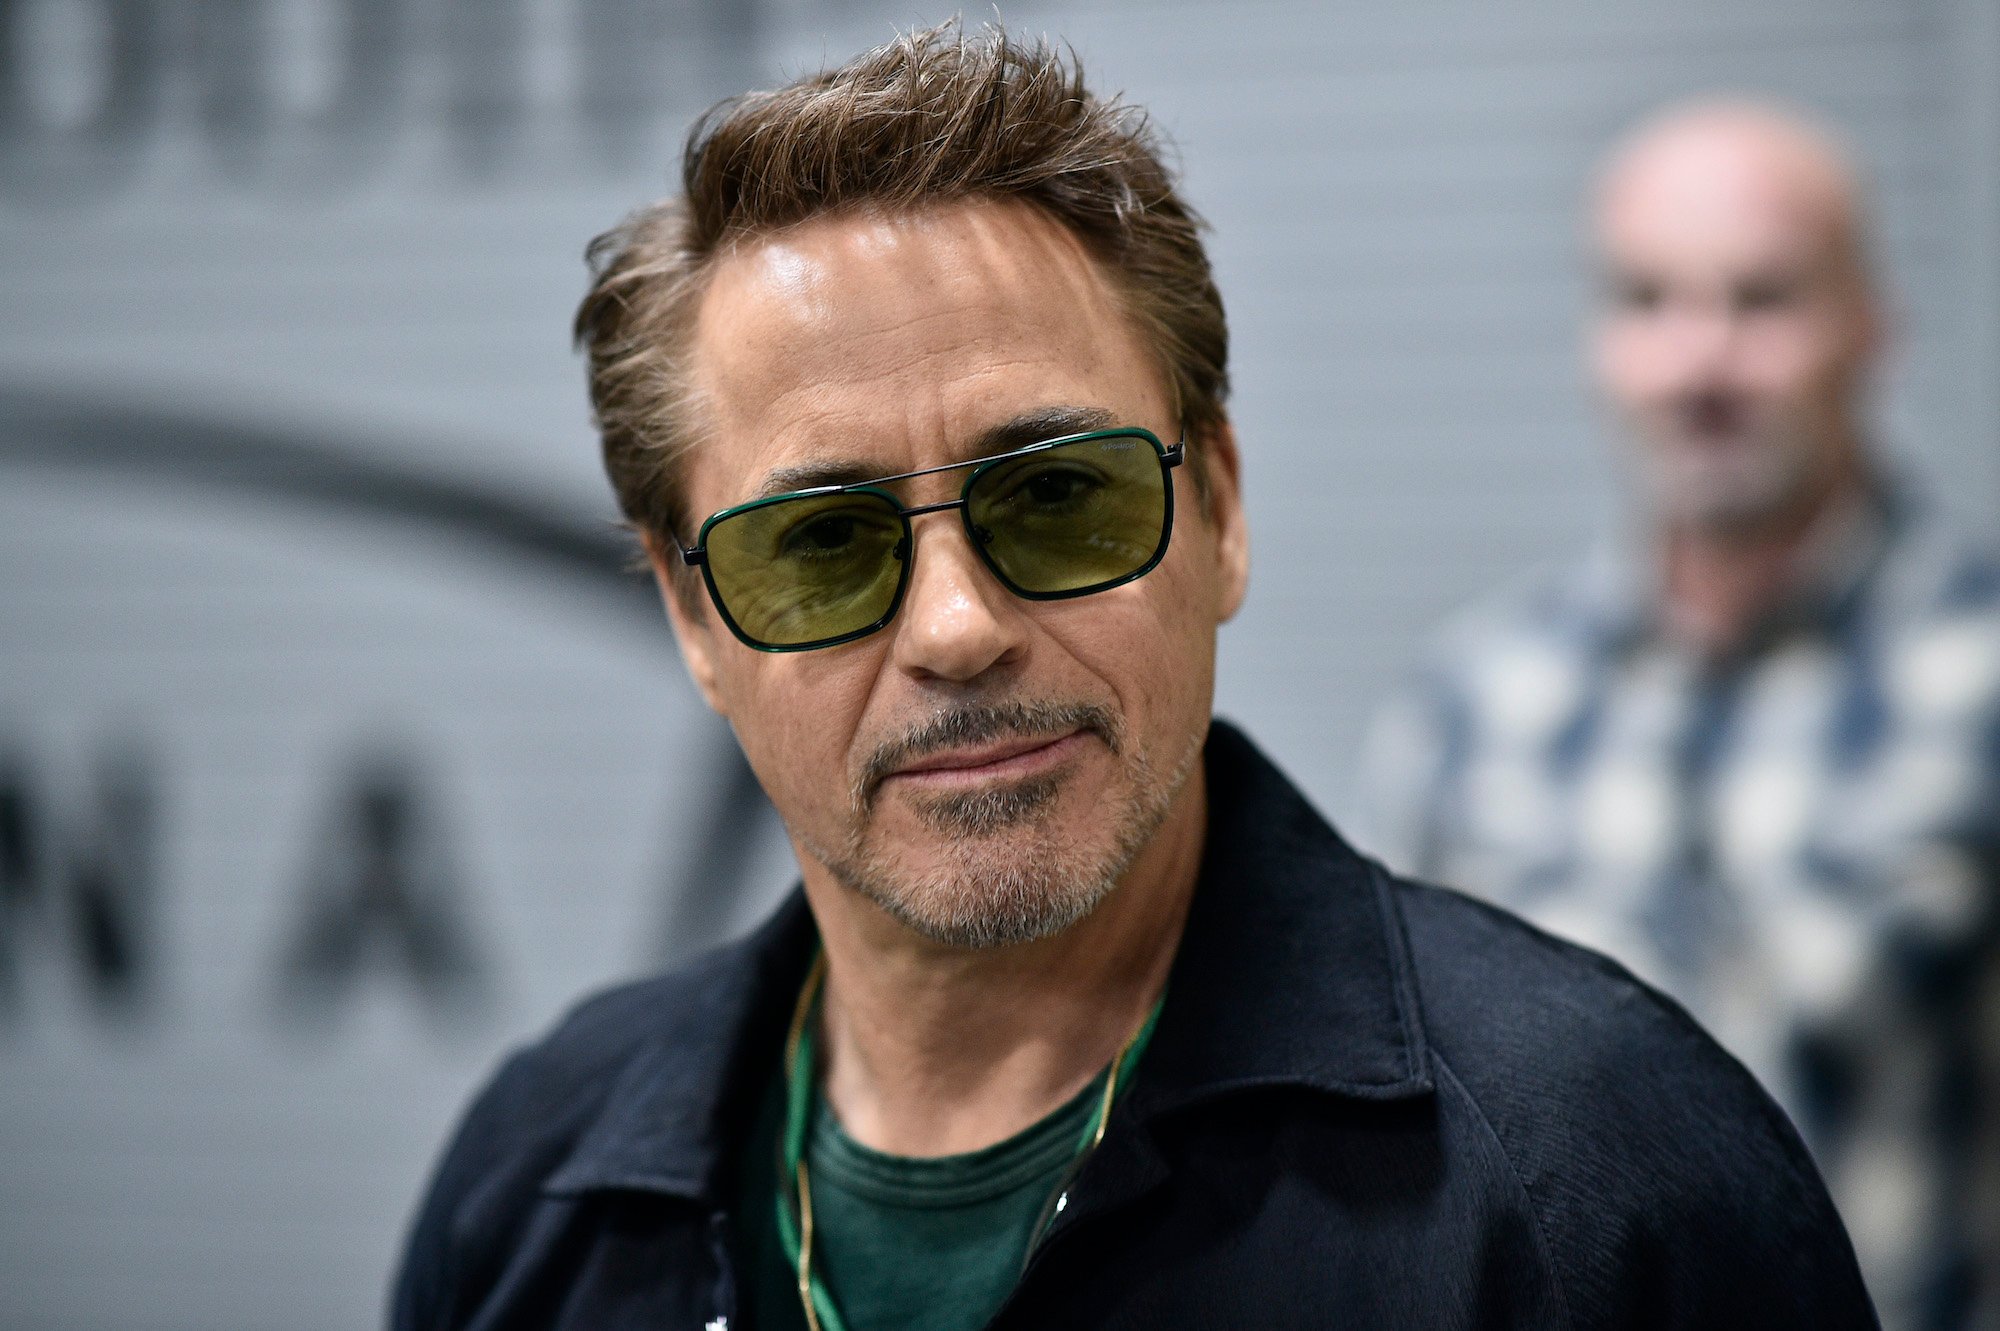 Robert Downey Jr. smiling, wearing sunglasses